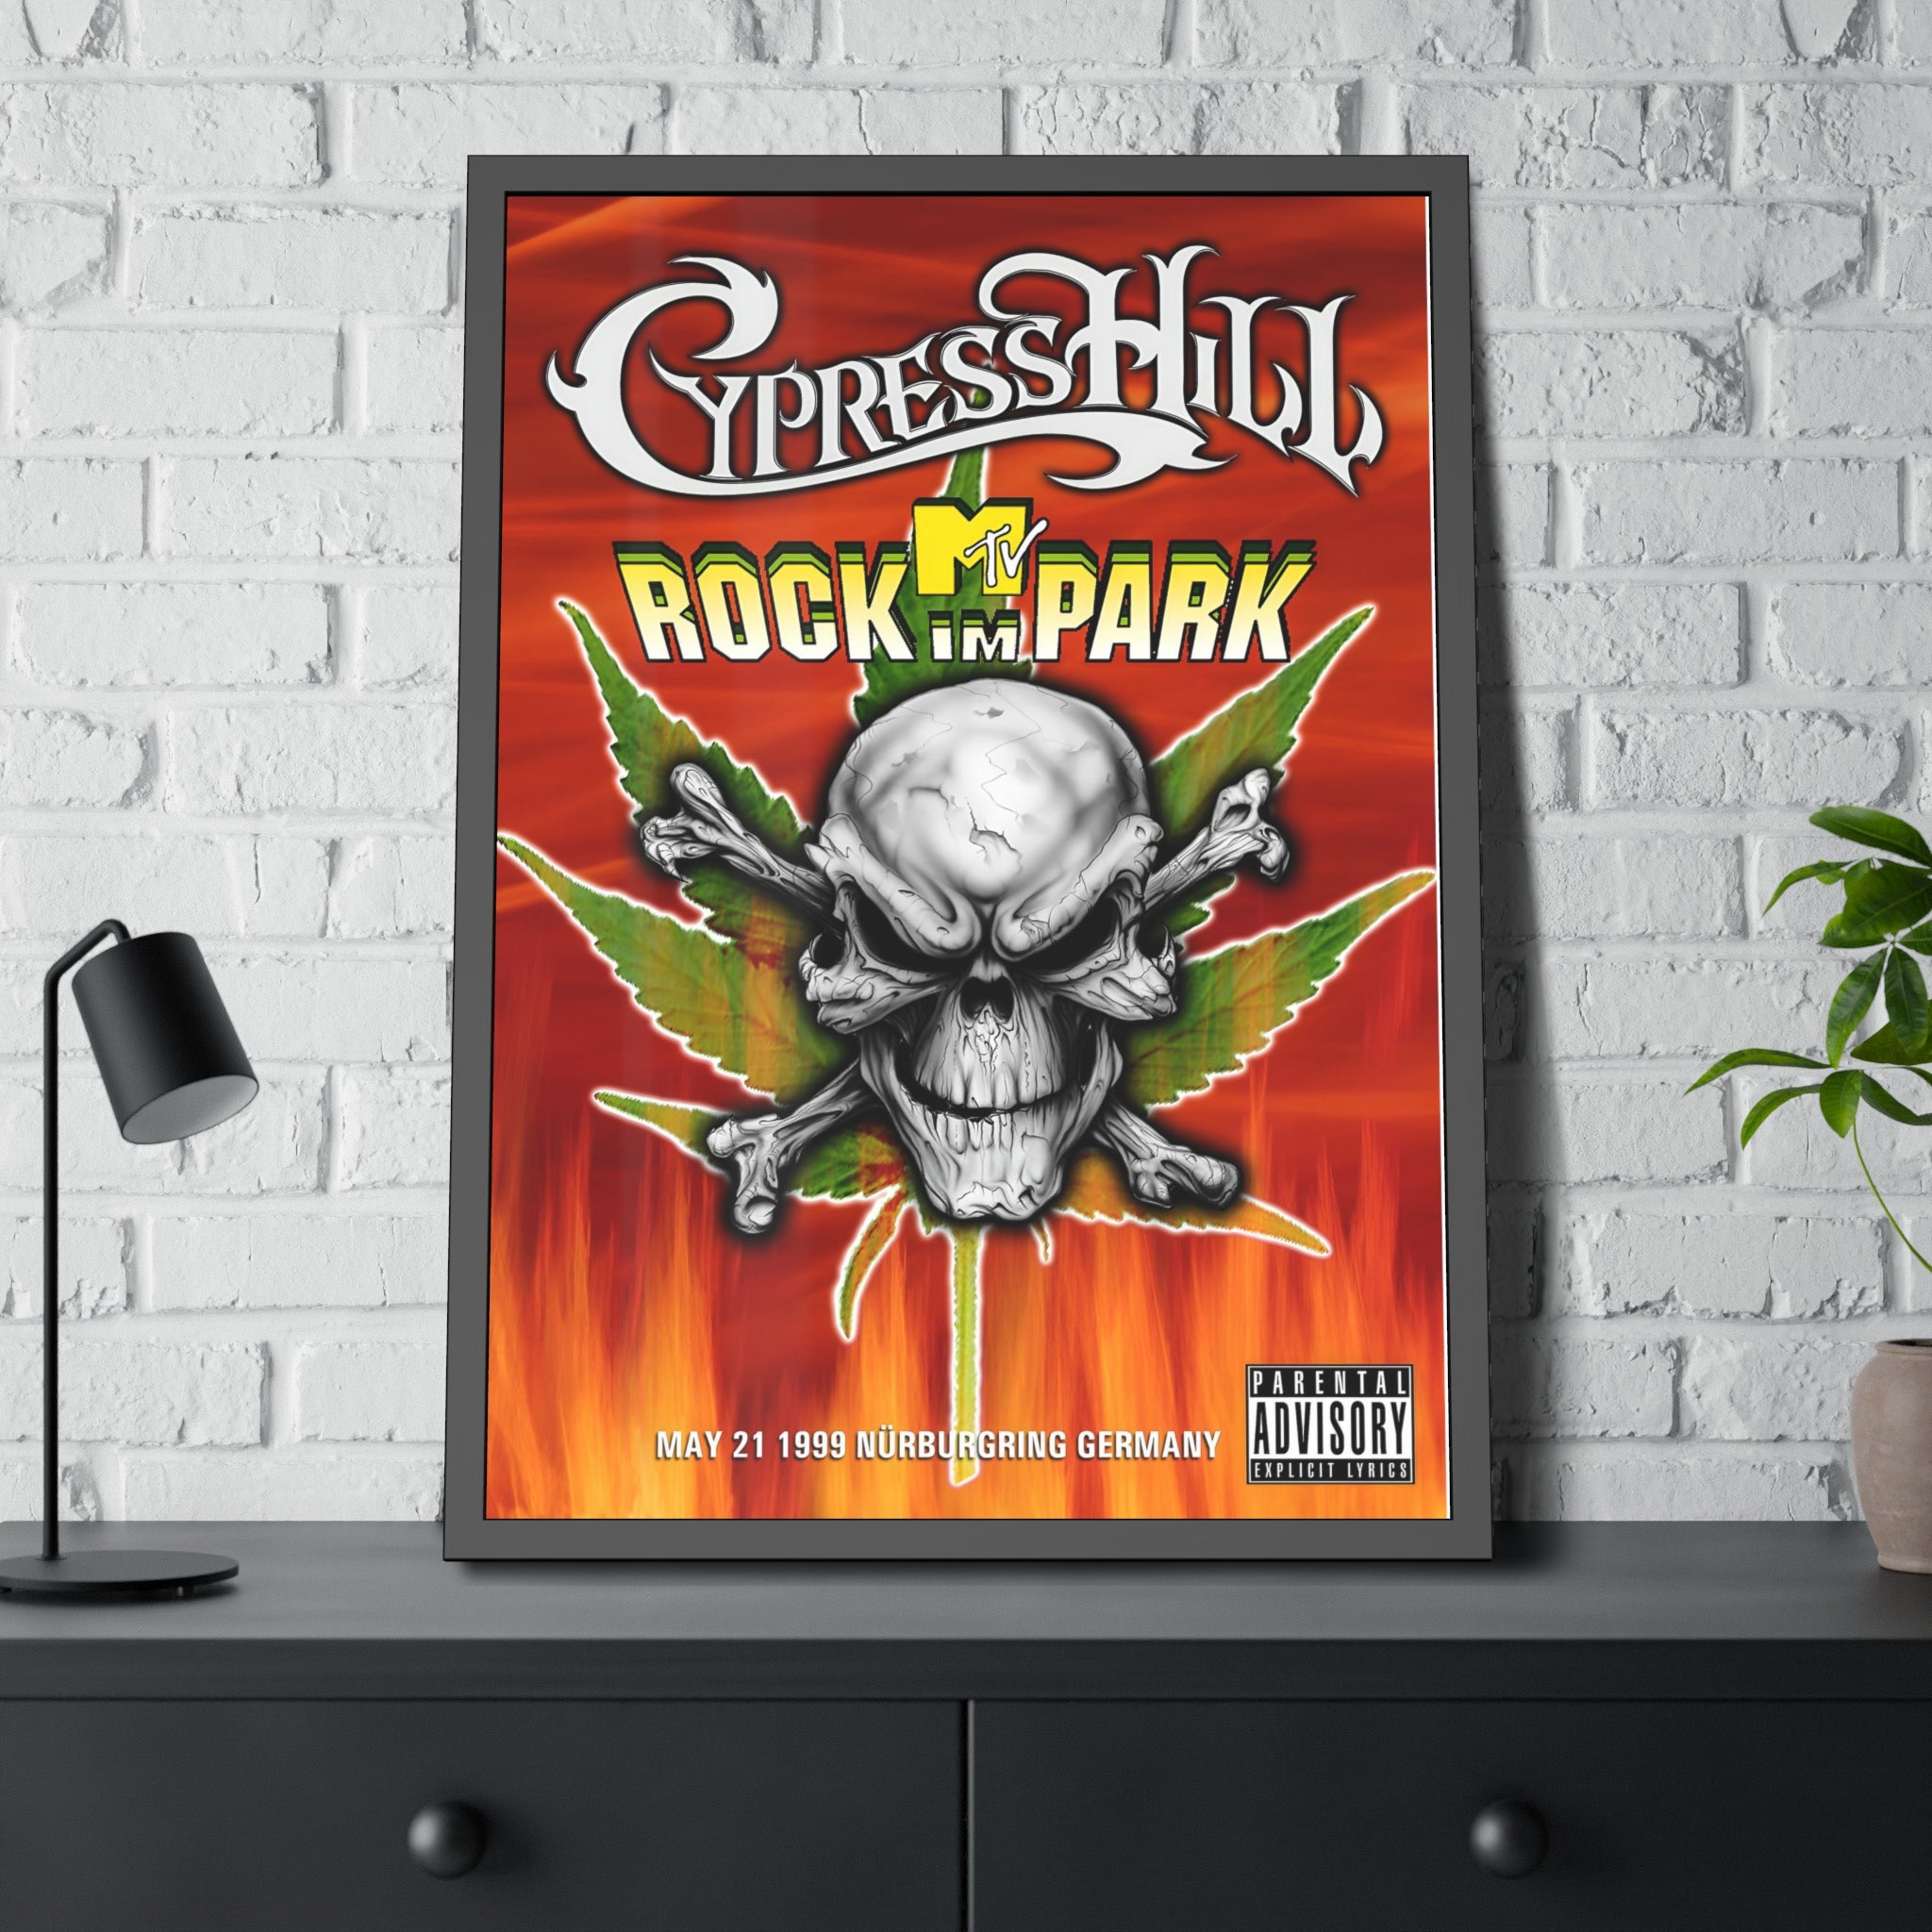 Cypress Hill Concert Poster